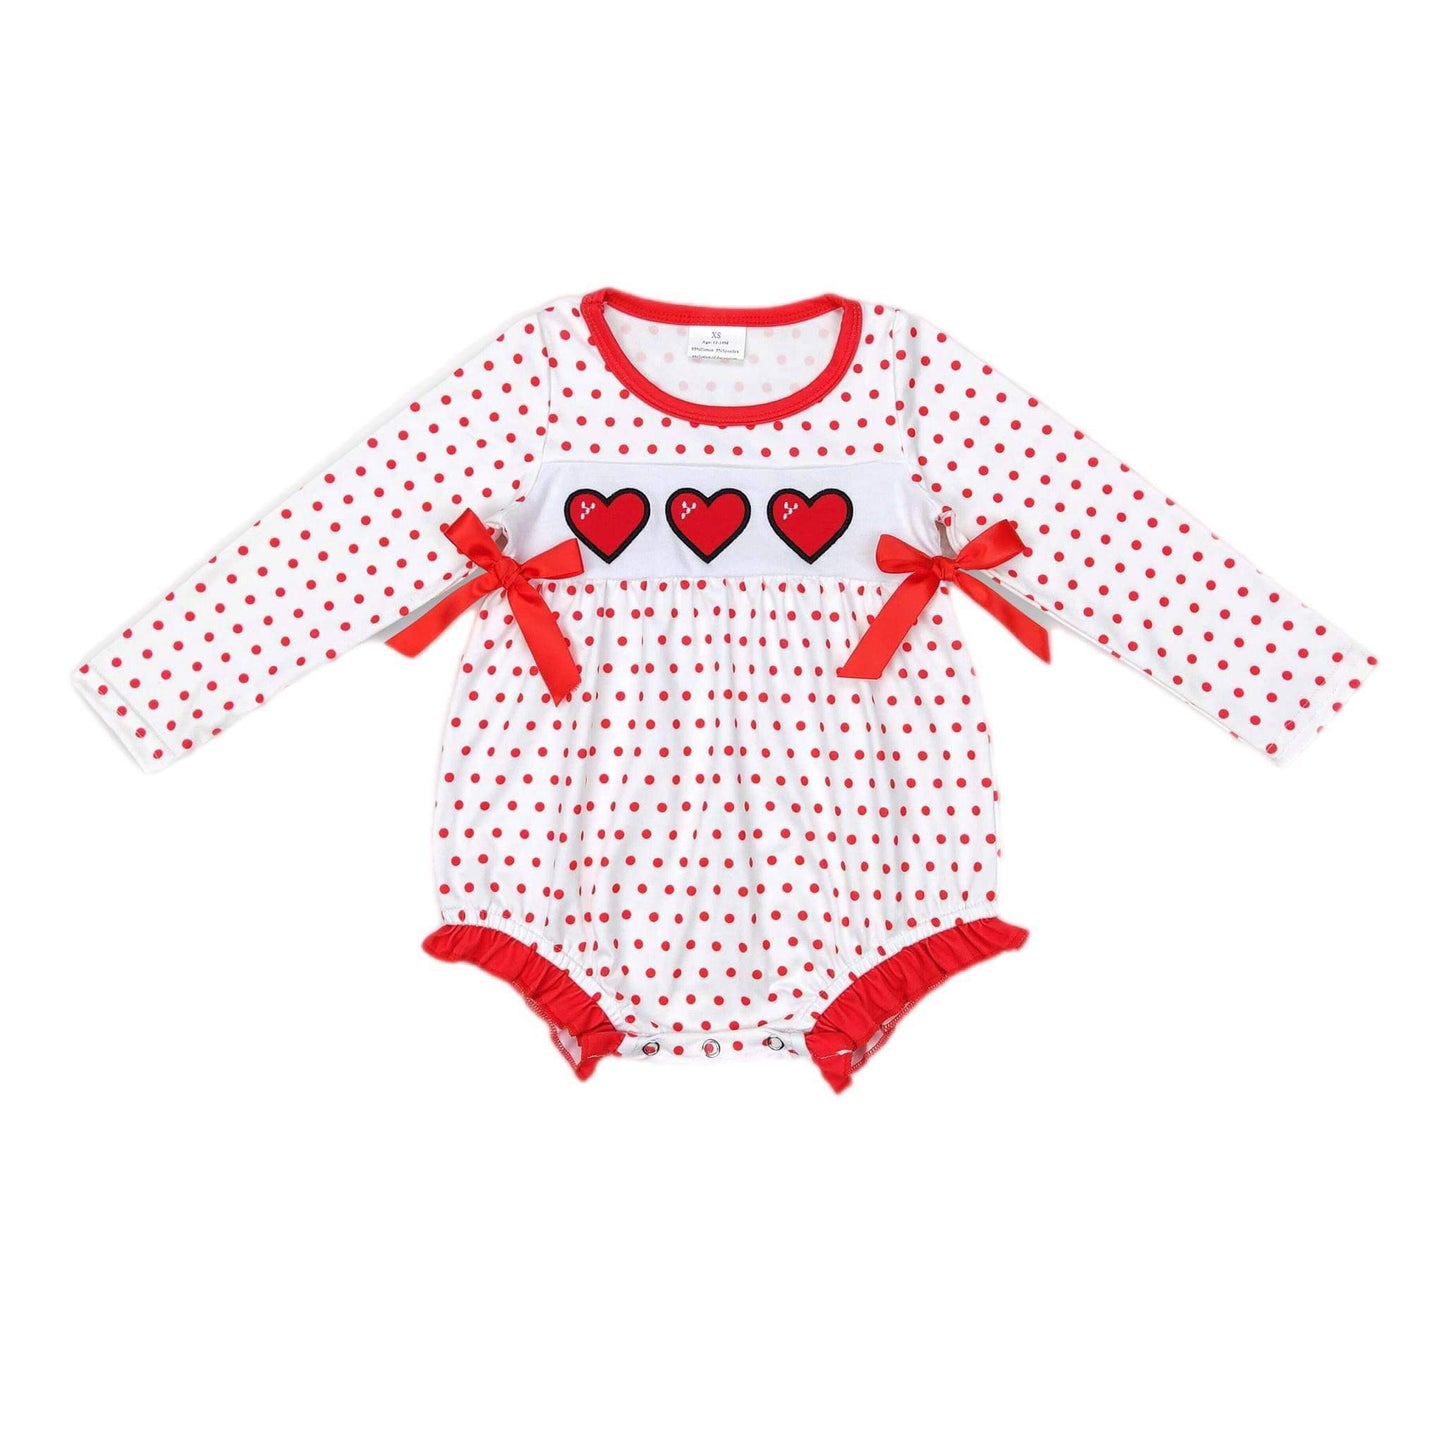 ᴡᴇᴇᴋʟʏ ᴘʀᴇ ᴏʀᴅᴇʀ Valentine's Day Embroidered Heart Ruffle Romper